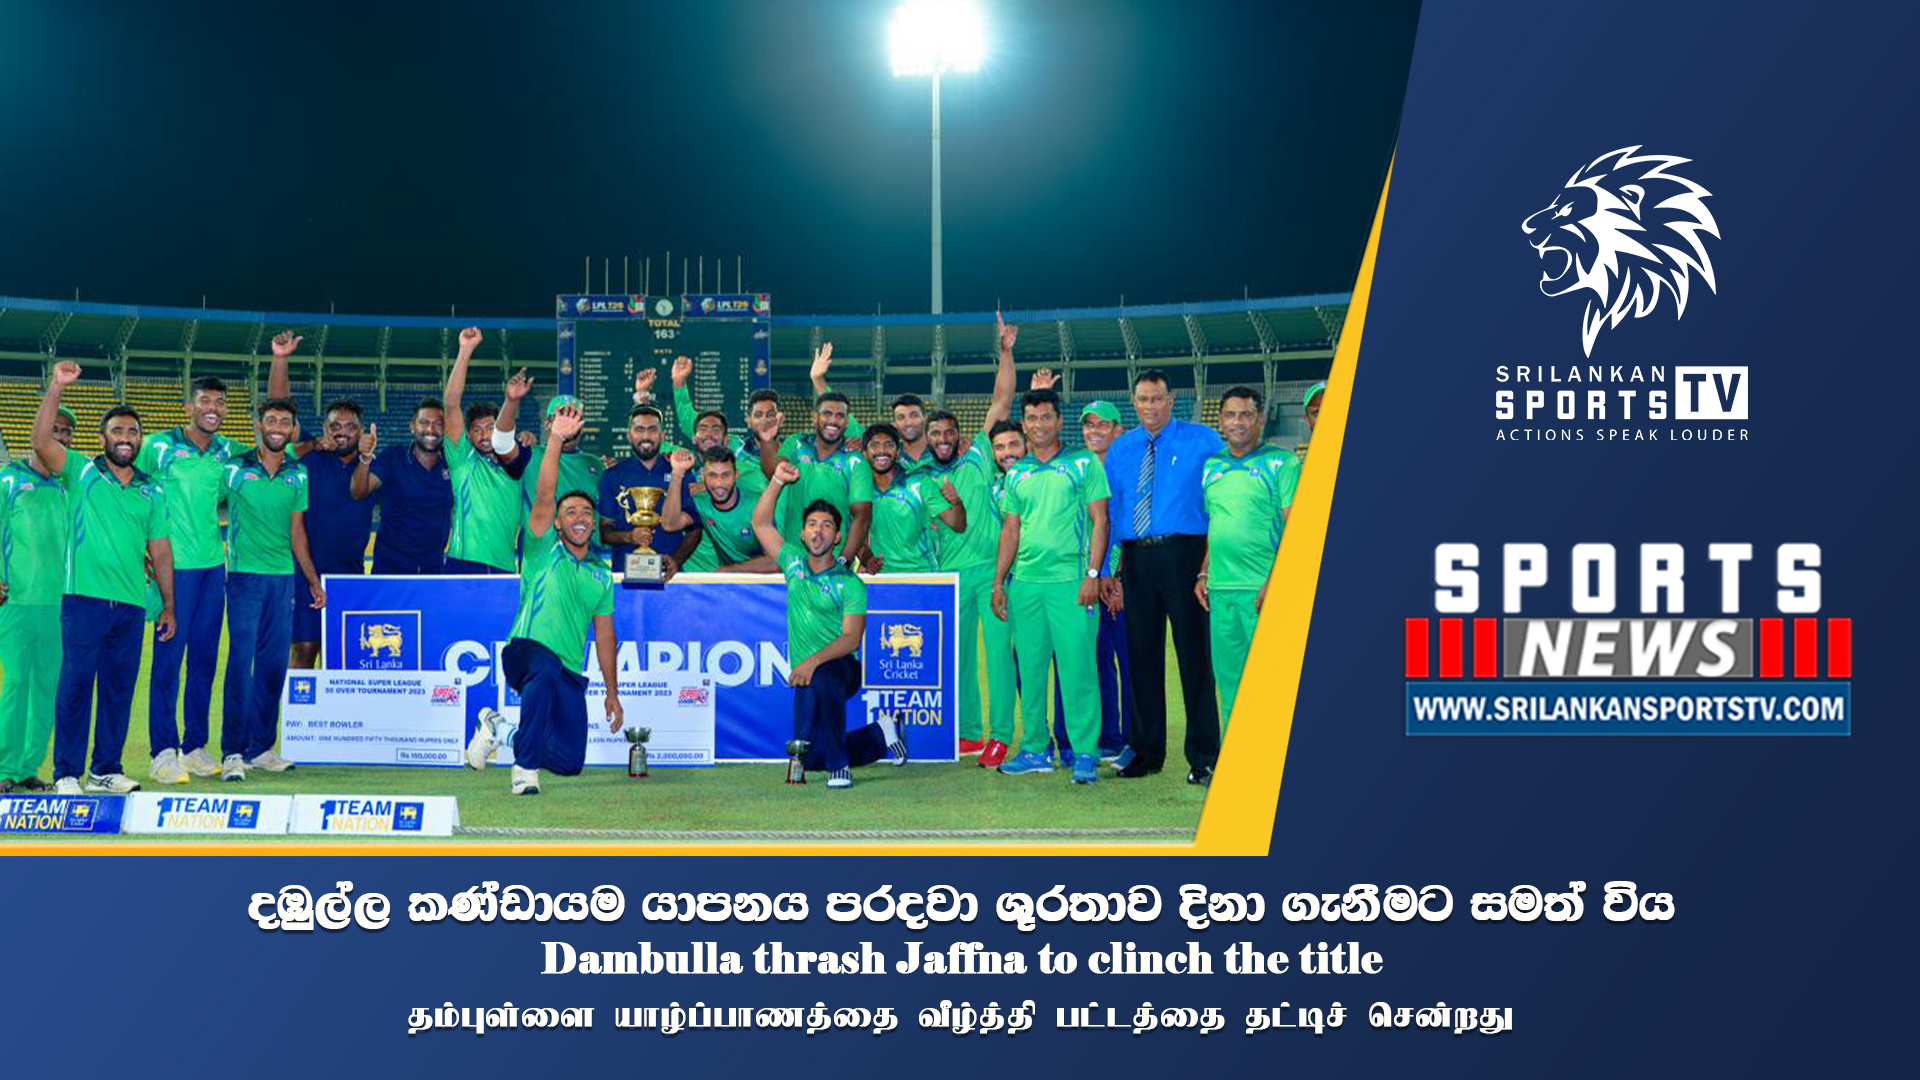 Dambulla thrash Jaffna to clinch the title